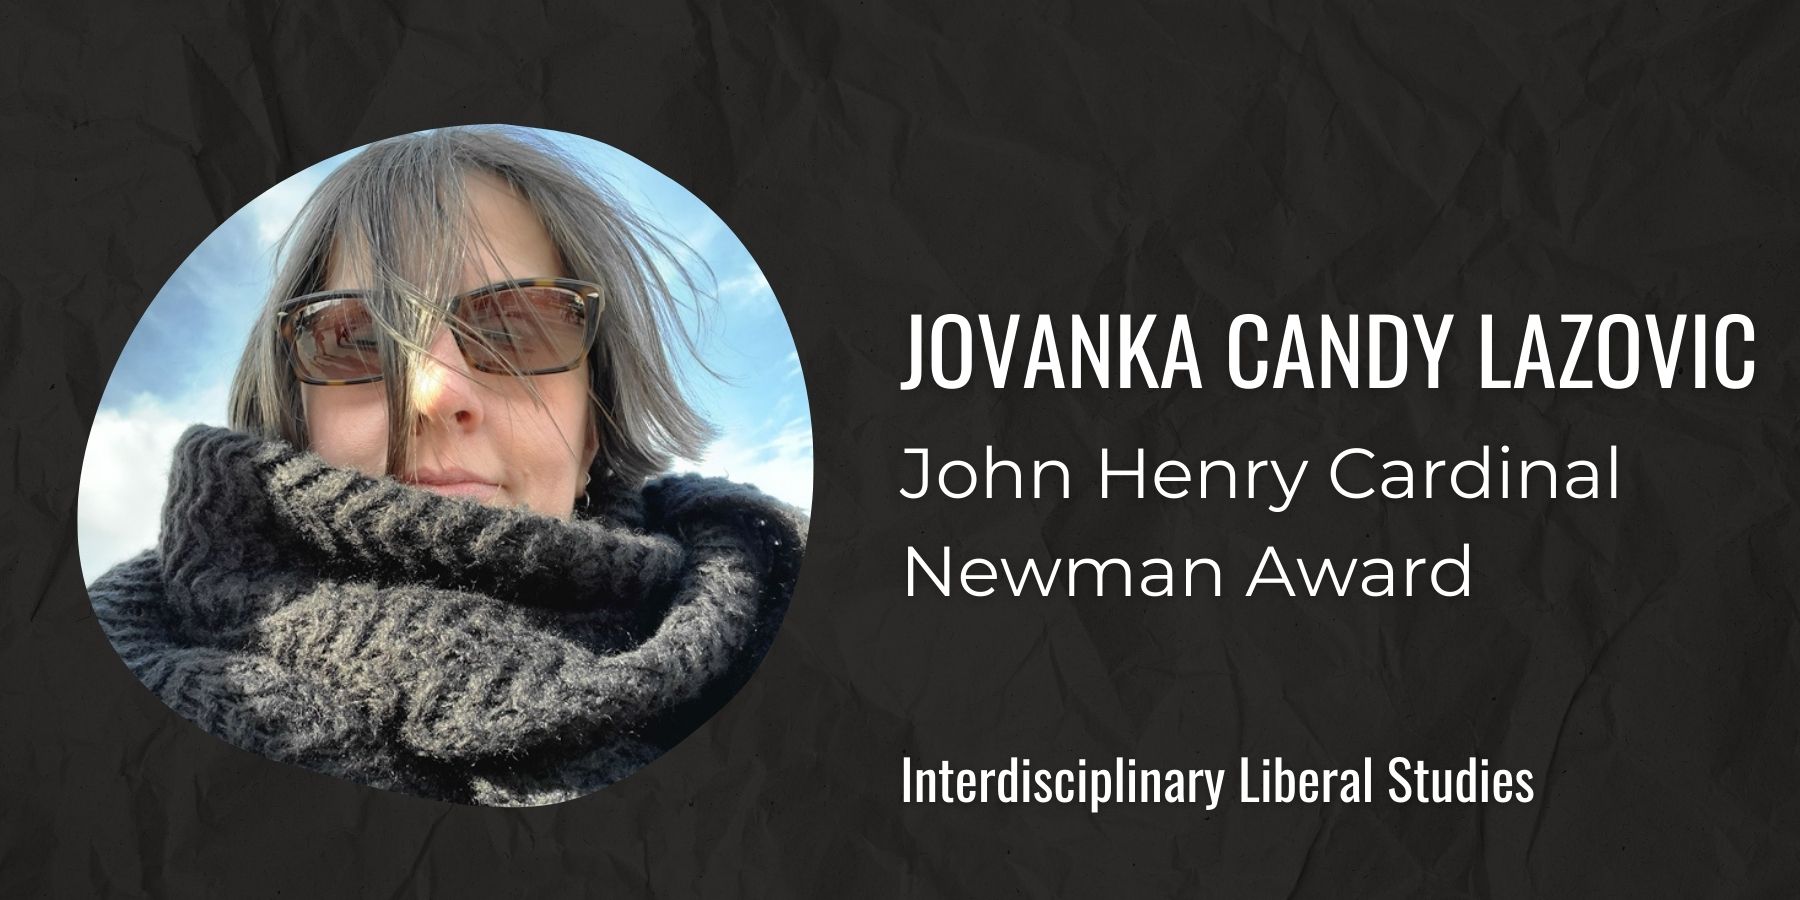 Image:Jovanka Candy Lazovic text: John Henry Cardinal Newman Award Interdisciplinary Liberal Studies